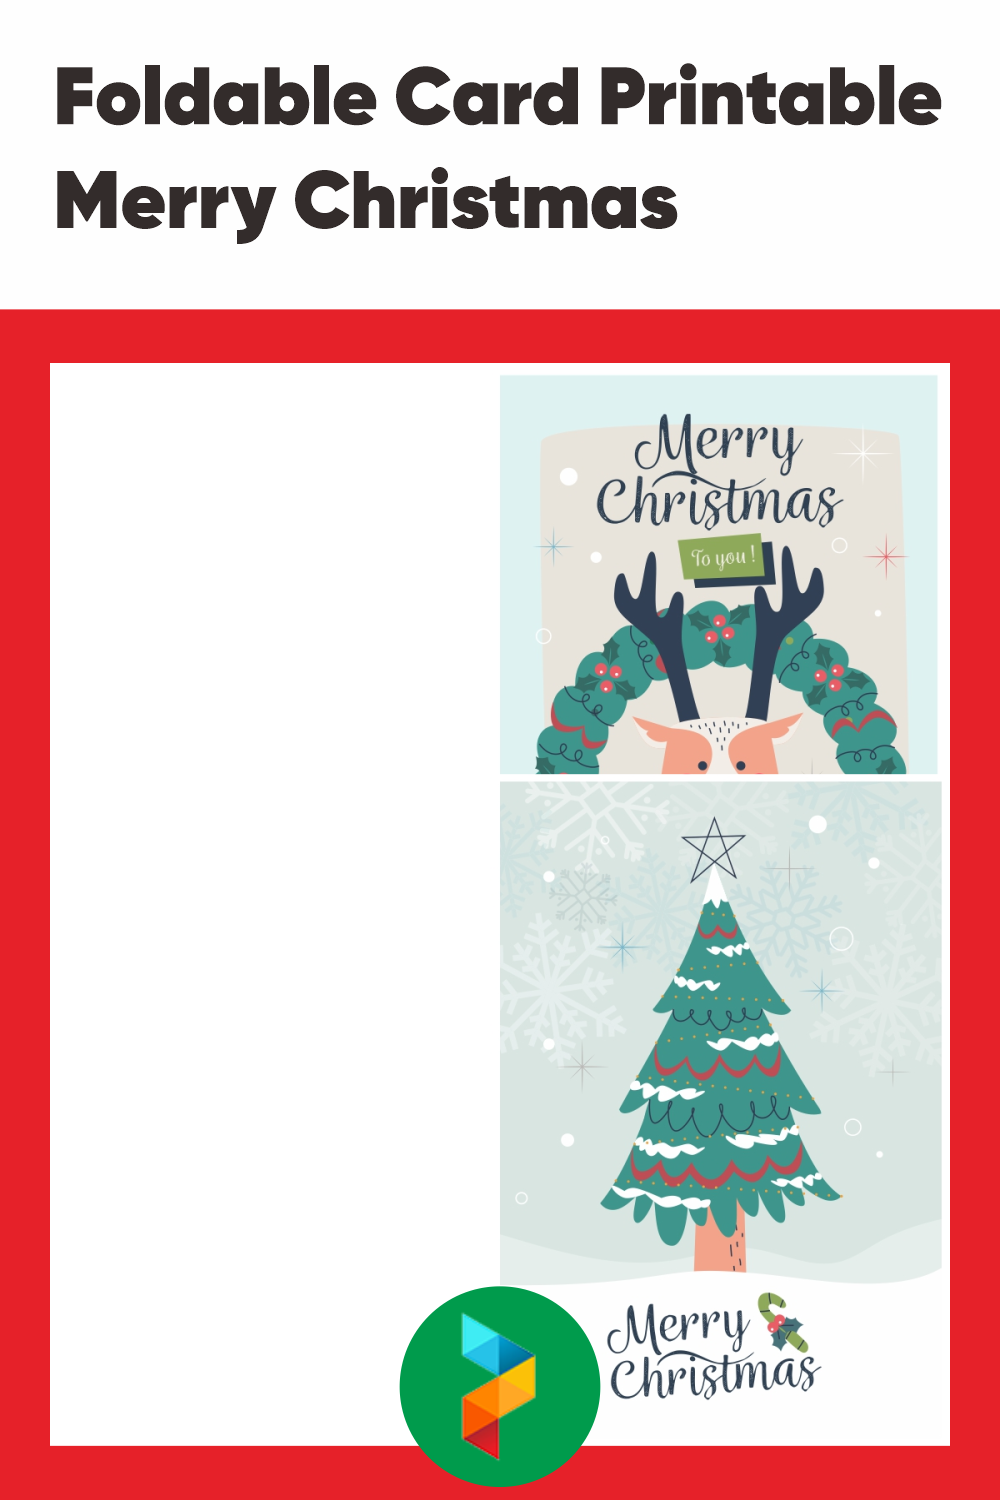 10 Best Foldable Card Printable Merry Christmas